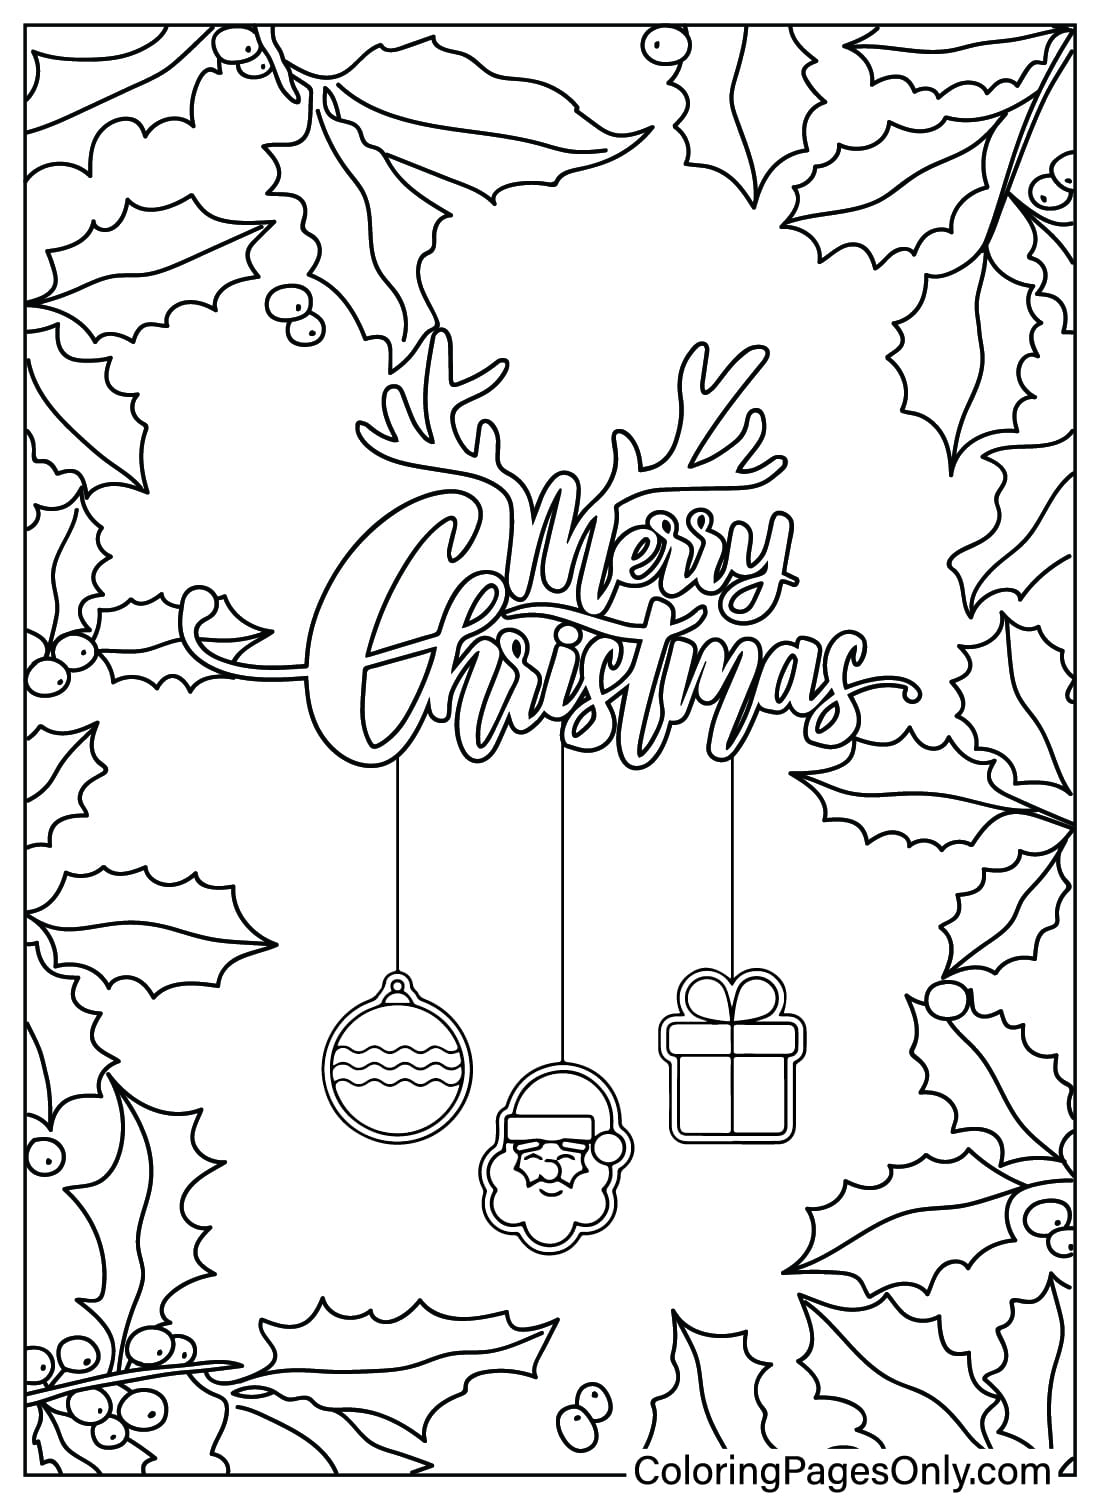 Página para colorear de acebo navideño para imprimir desde acebo navideño